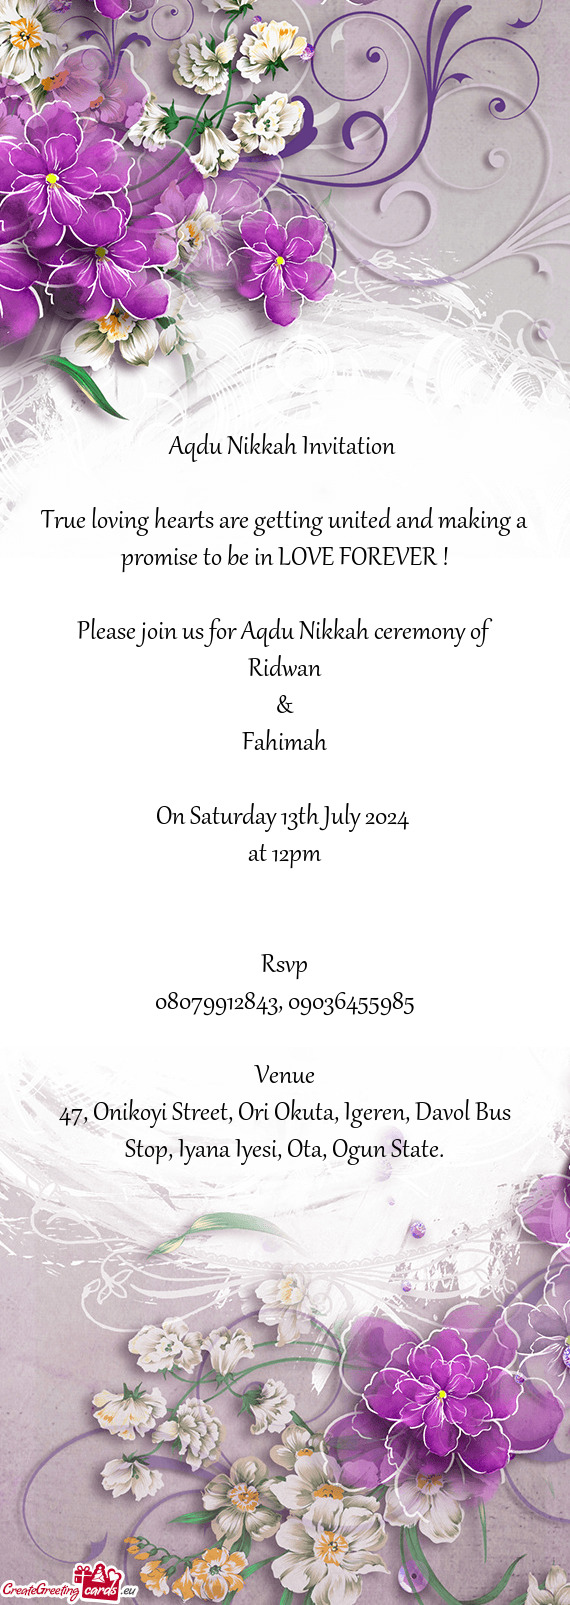 Aqdu Nikkah Invitation